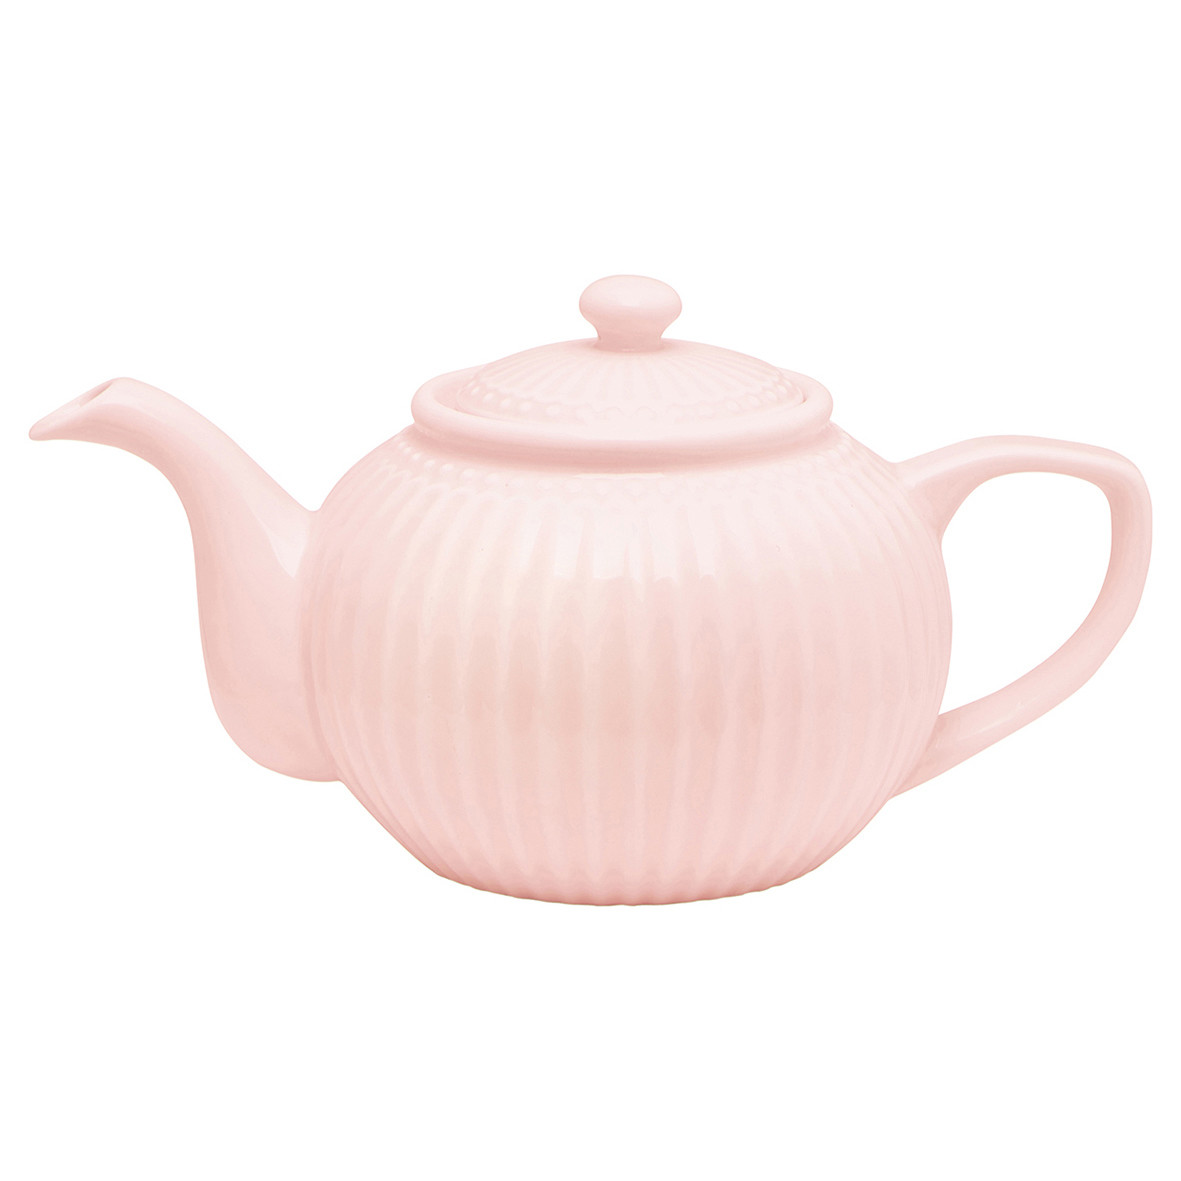 Greengate - Teekanne Alice pink h 14 cm